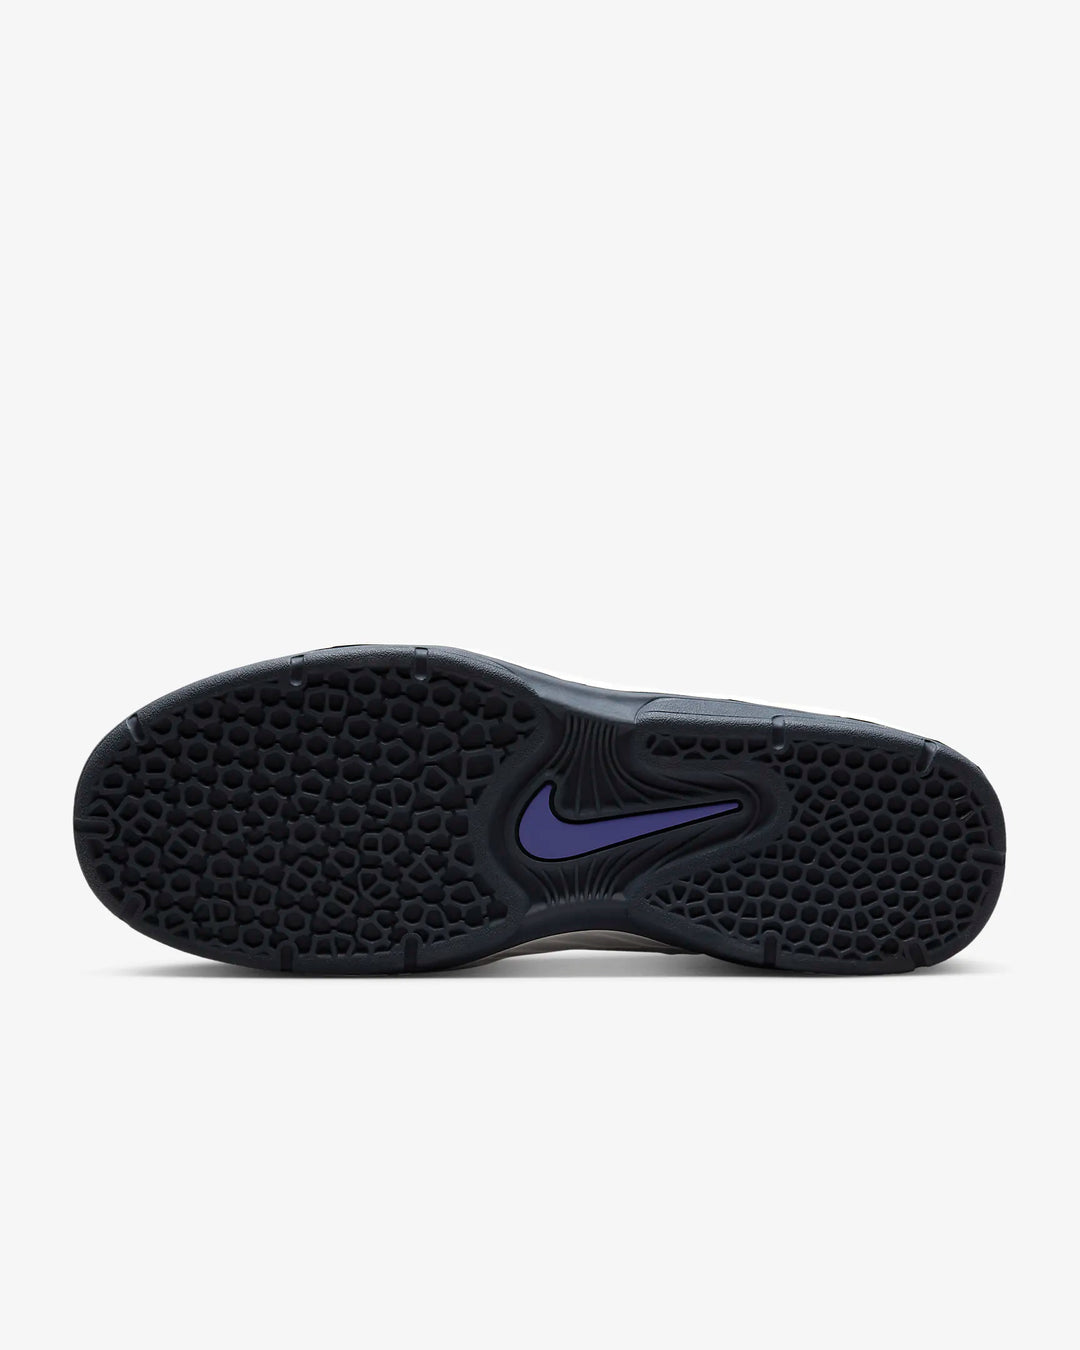 Nike SB Vertebrae Men's Shoes - 101 SUMMIT WHITE/PERSIAN VIOLET - Sun Diego Boardshop